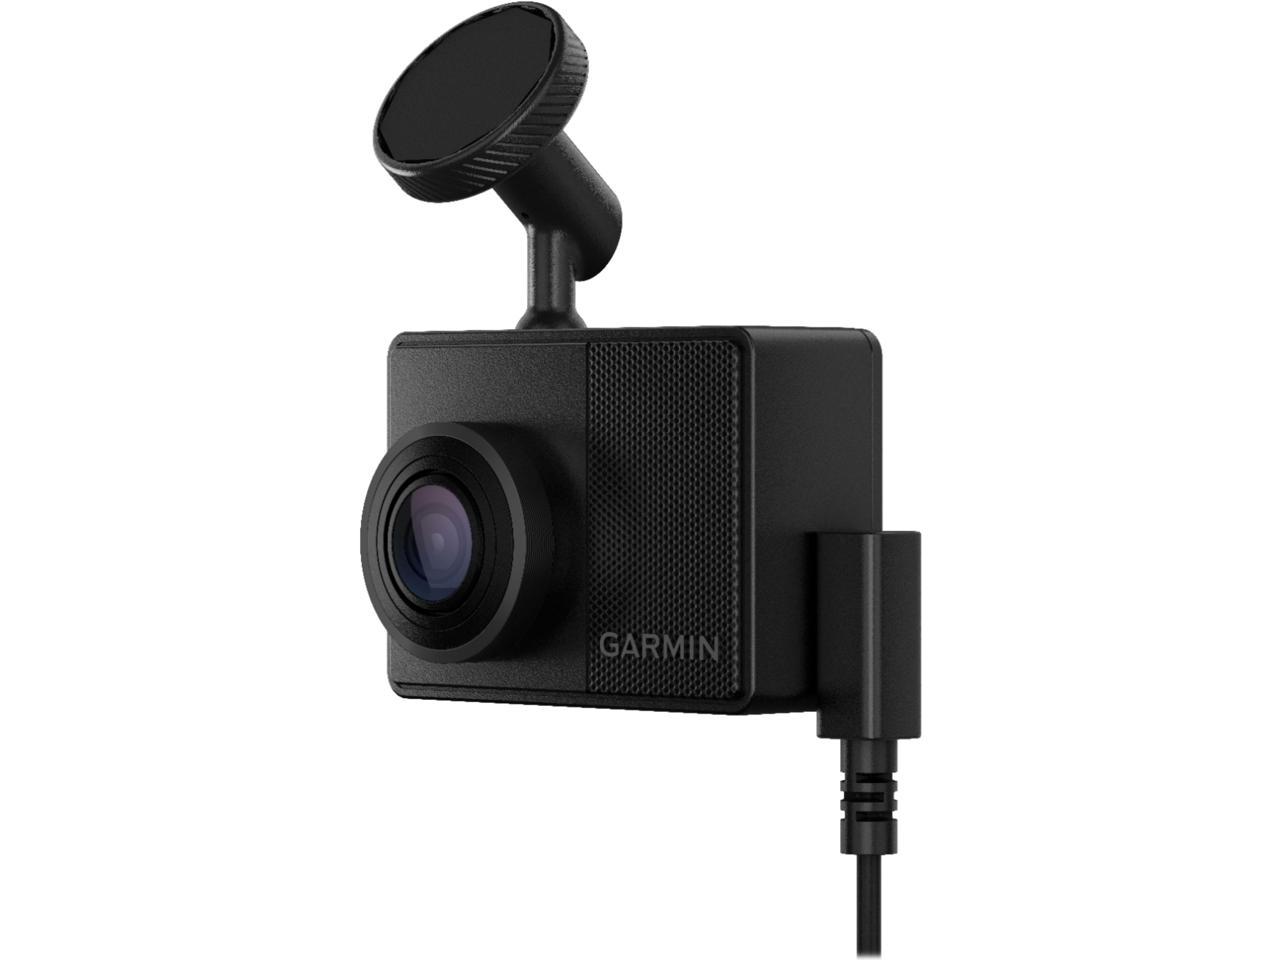 Garmin 67W 1440p Dash Cam, Black #010-02505-05 - image 9 of 21